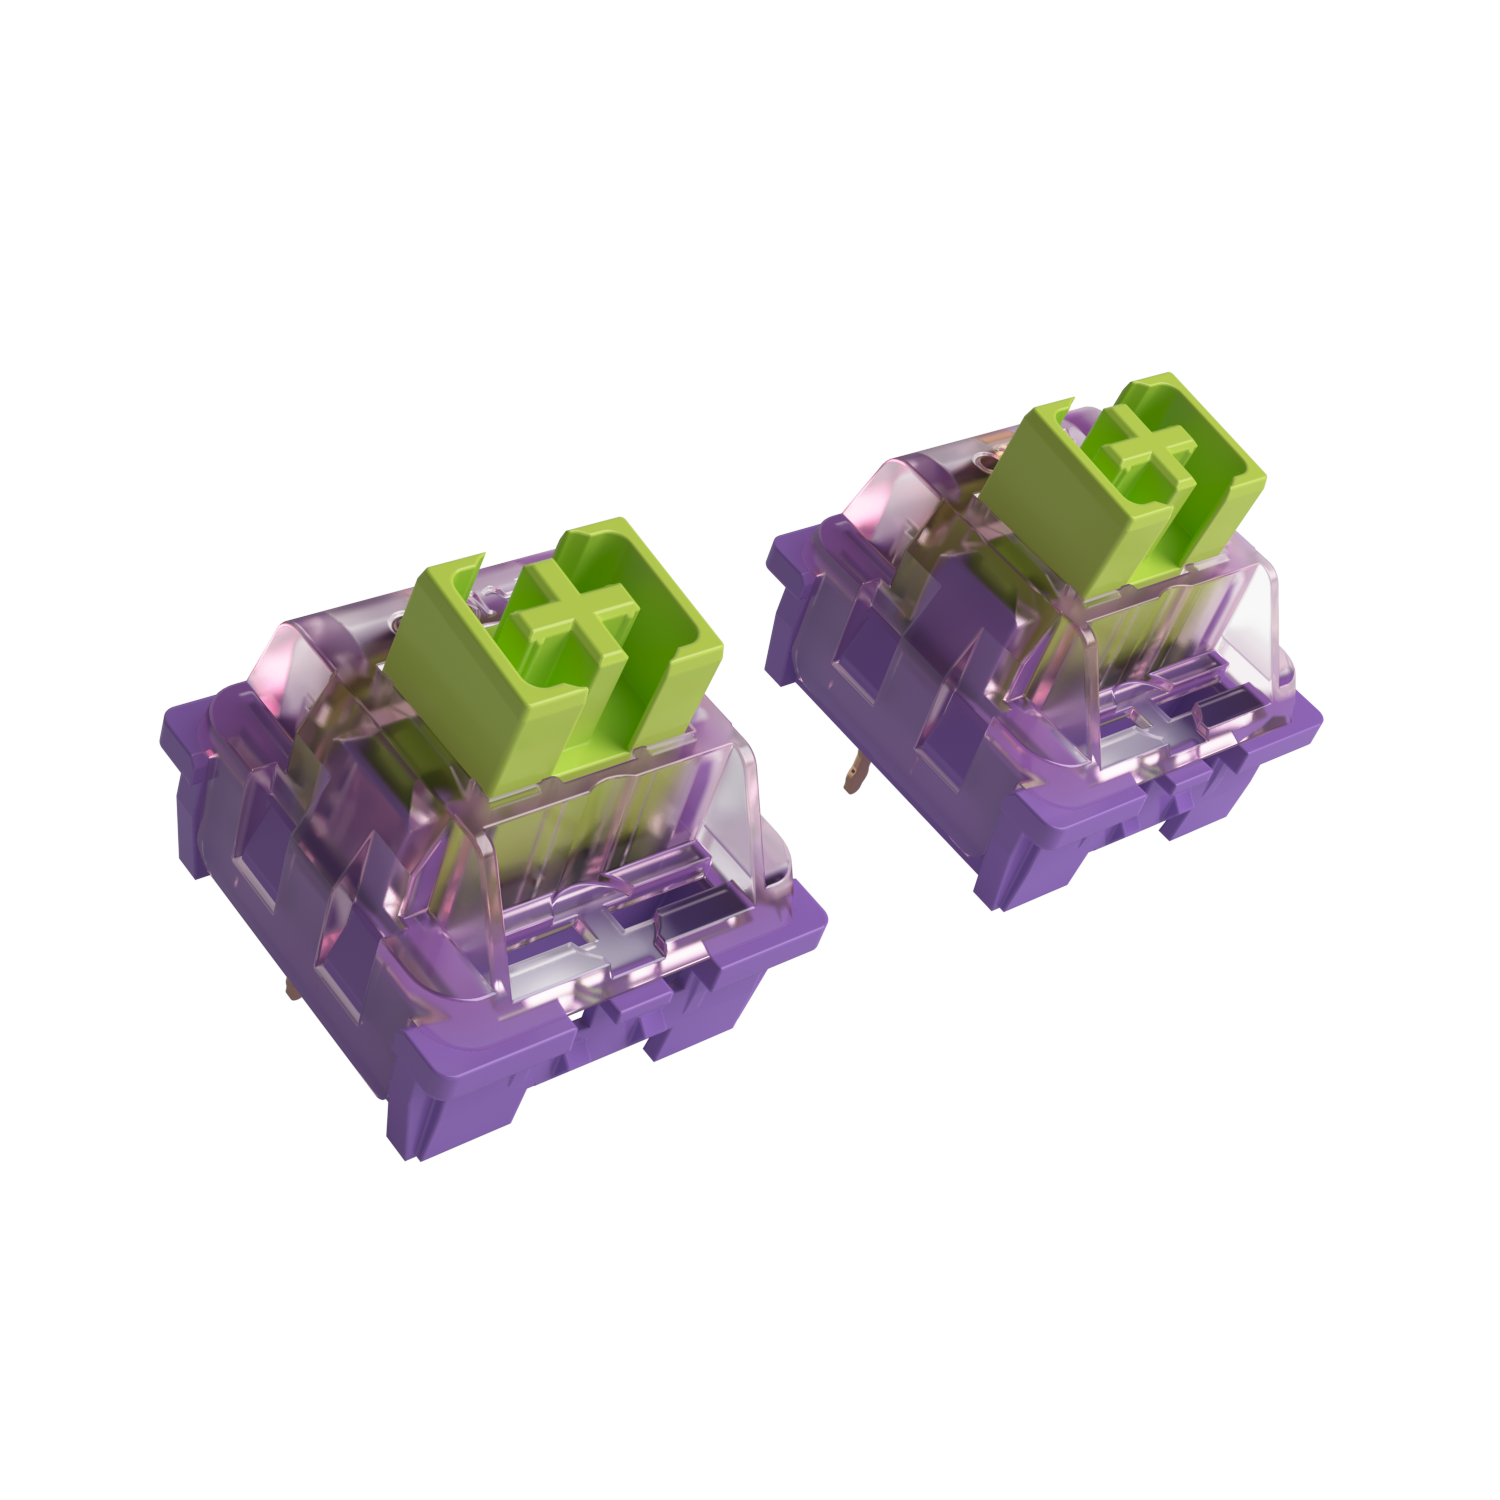 Cs jelly. Akko CS Switch. Свитчи/Switch Akko CS Jelly Purple. Akko Jelly Black Switches. Набор переключателей Akko CS Switch (45 шт) Jelly Lavender.